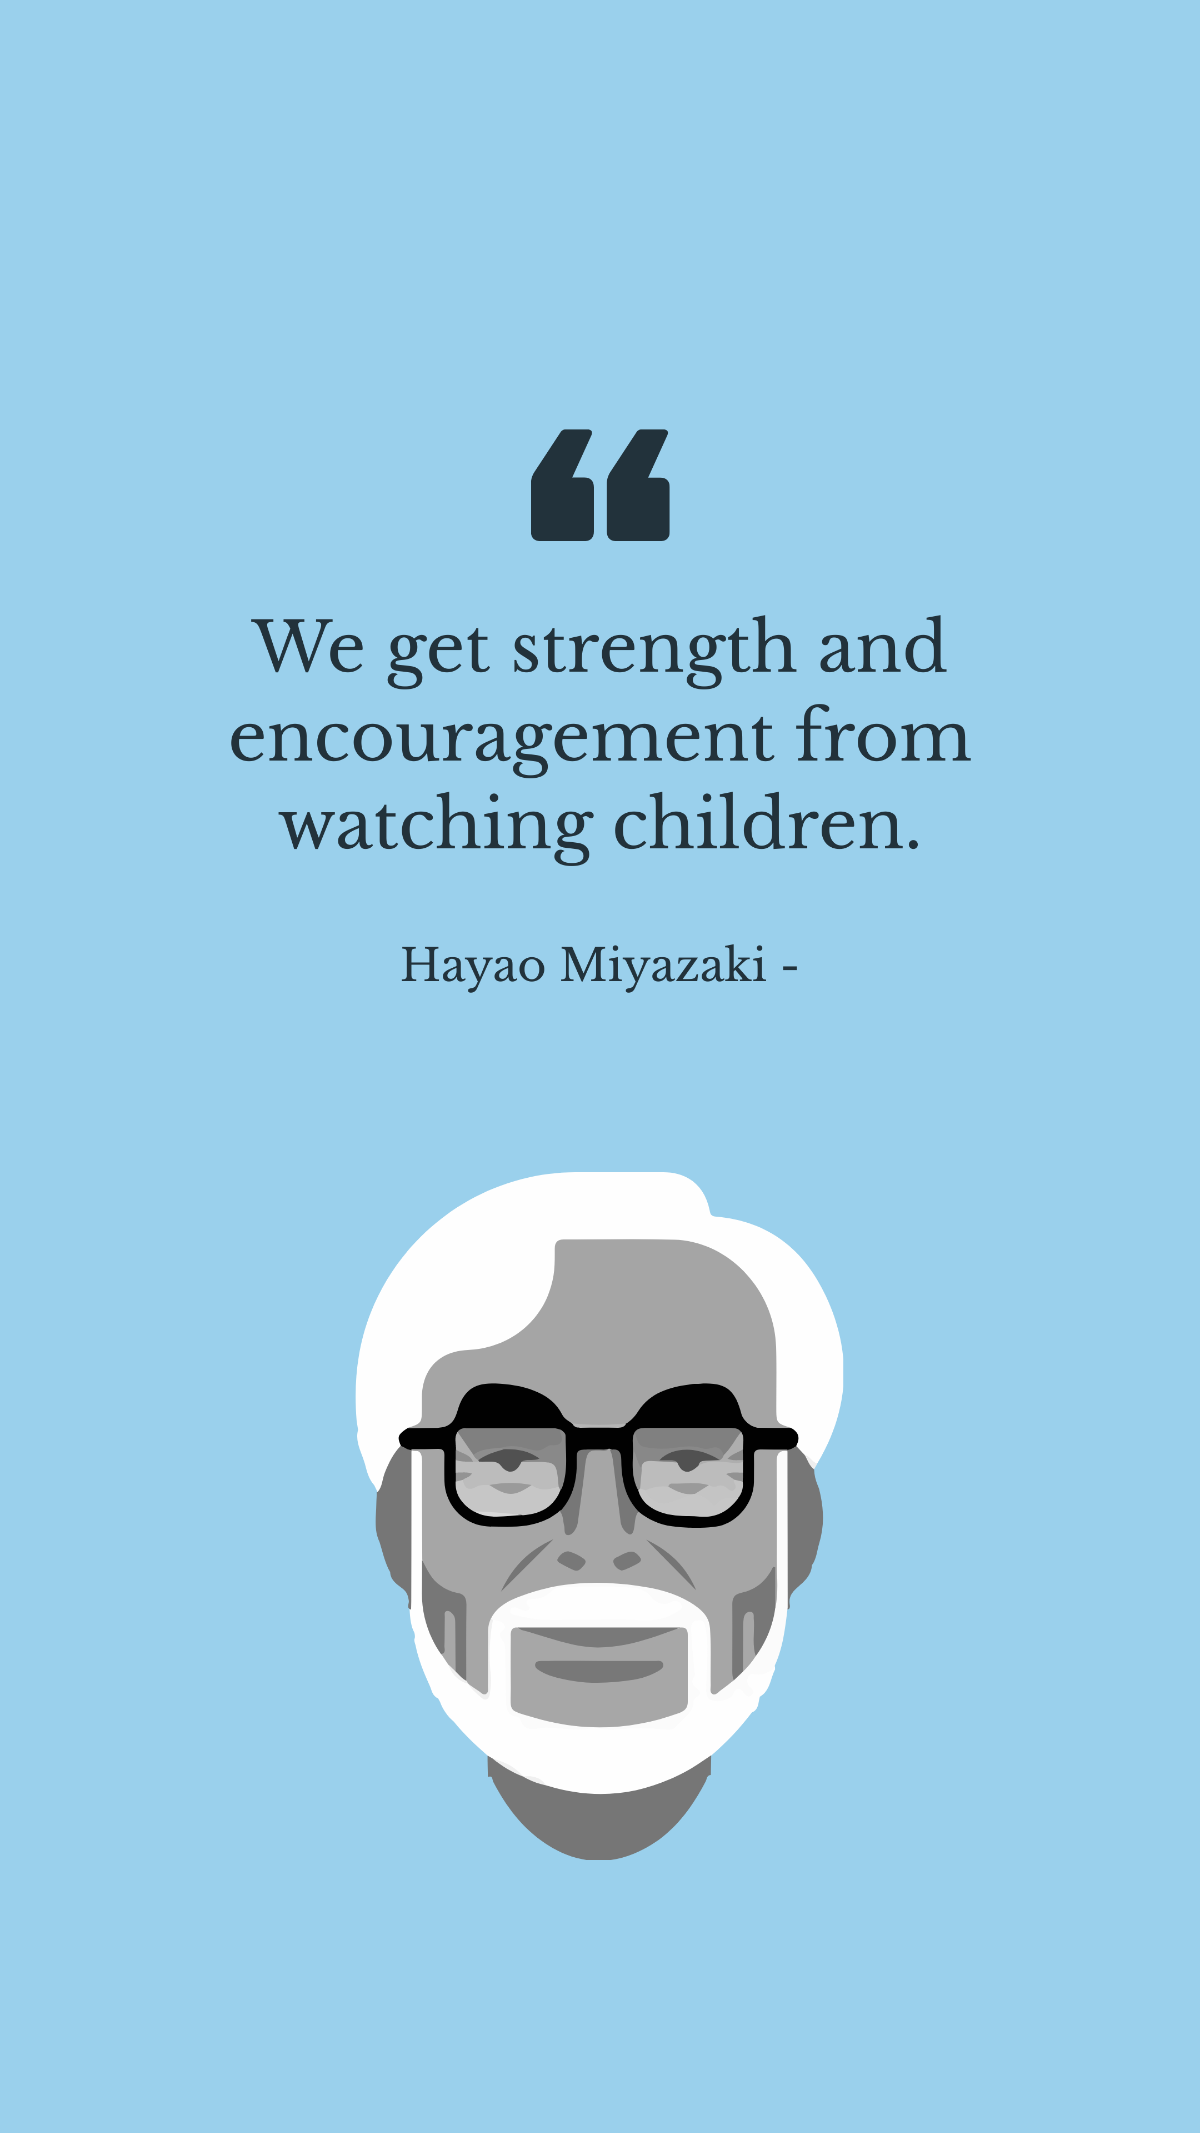 Free Hayao Miyazaki - We get strength and encouragement from watching children. Template